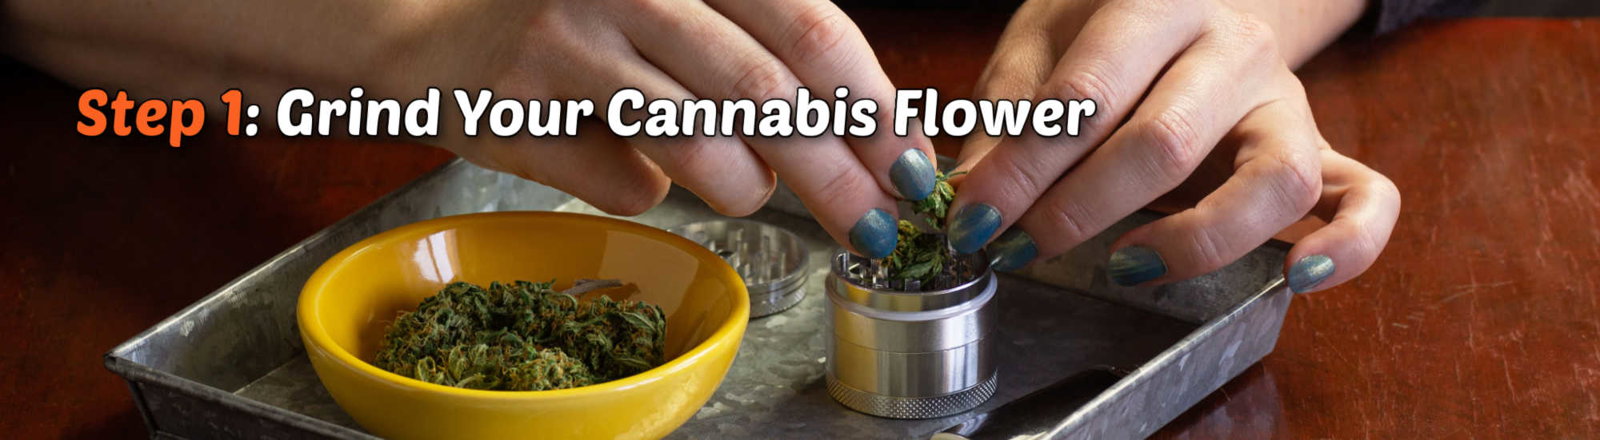 image of grind cannabis flower to make hemp wrap